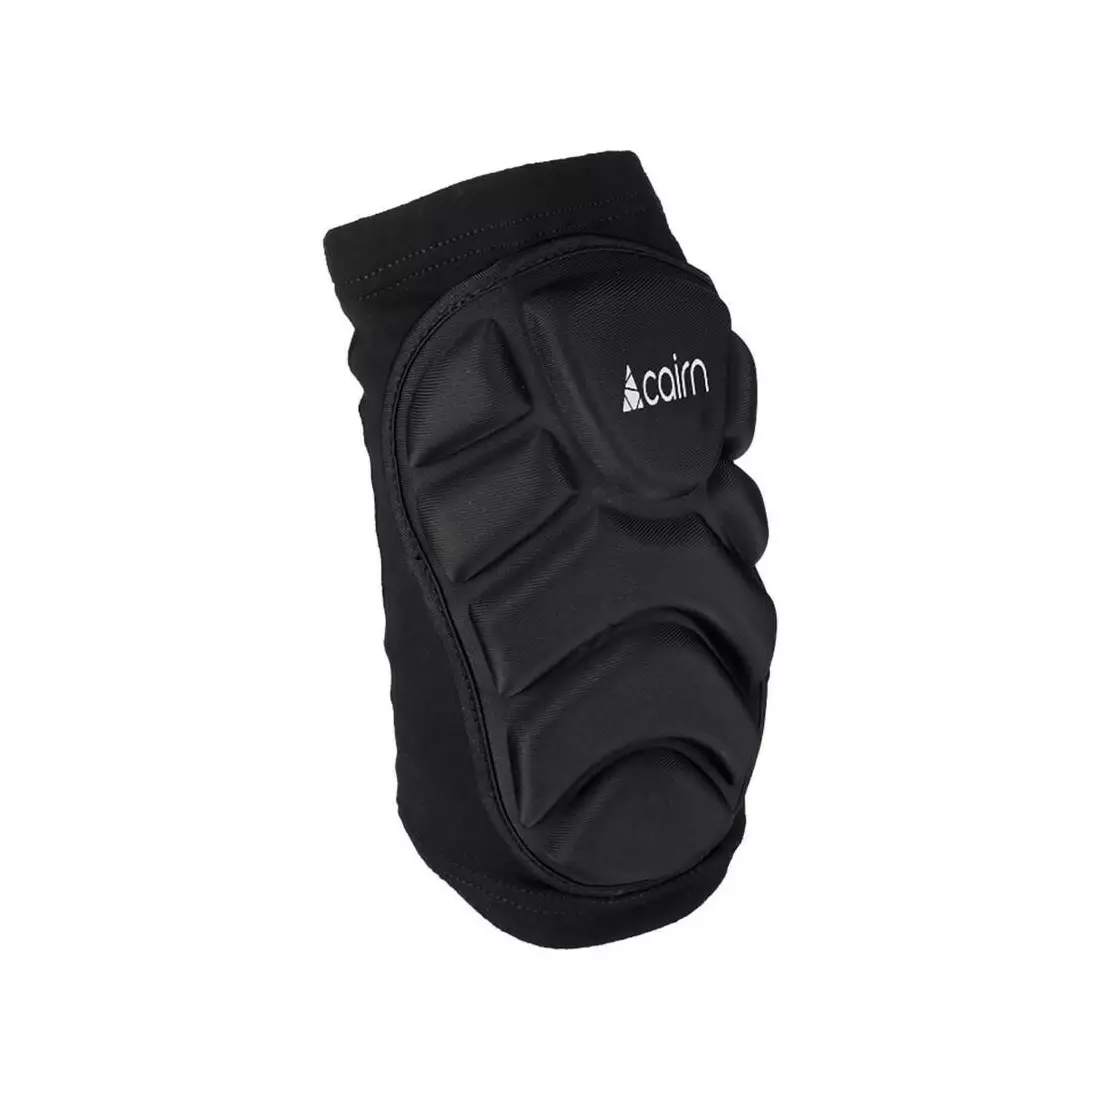 CAIRN PROTYL ski / snowboard knee pads, black